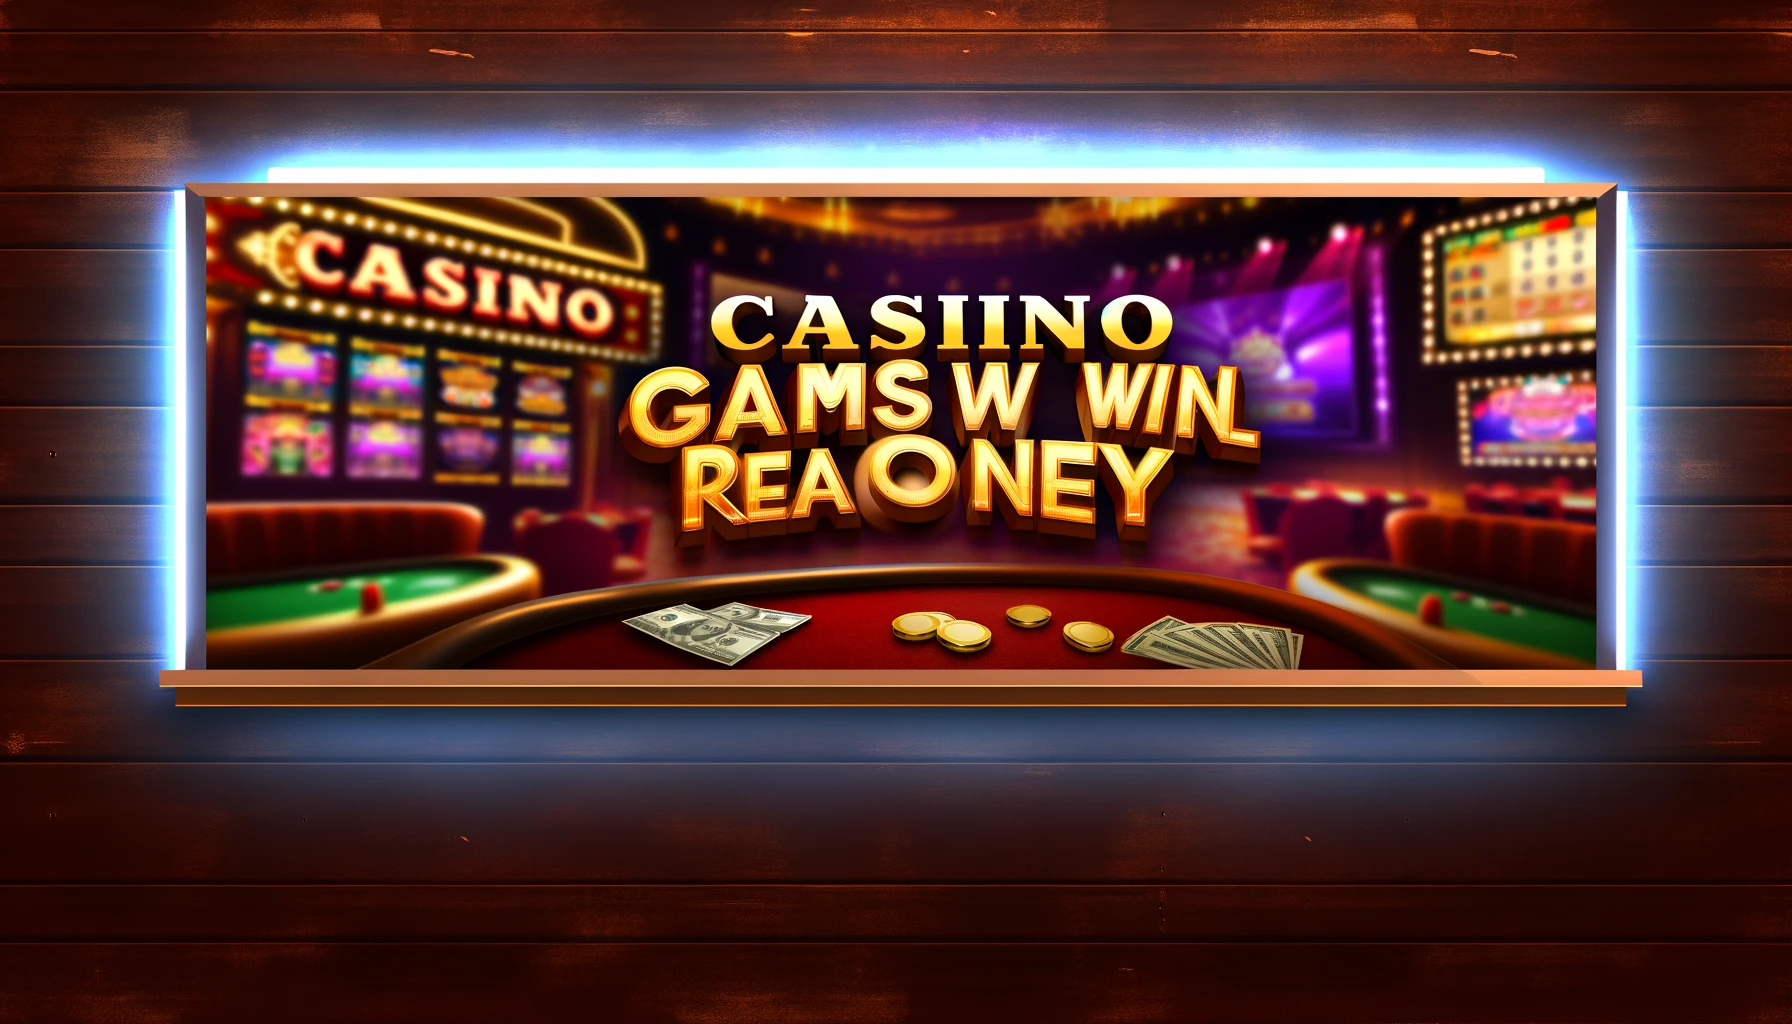 Casino games win real money